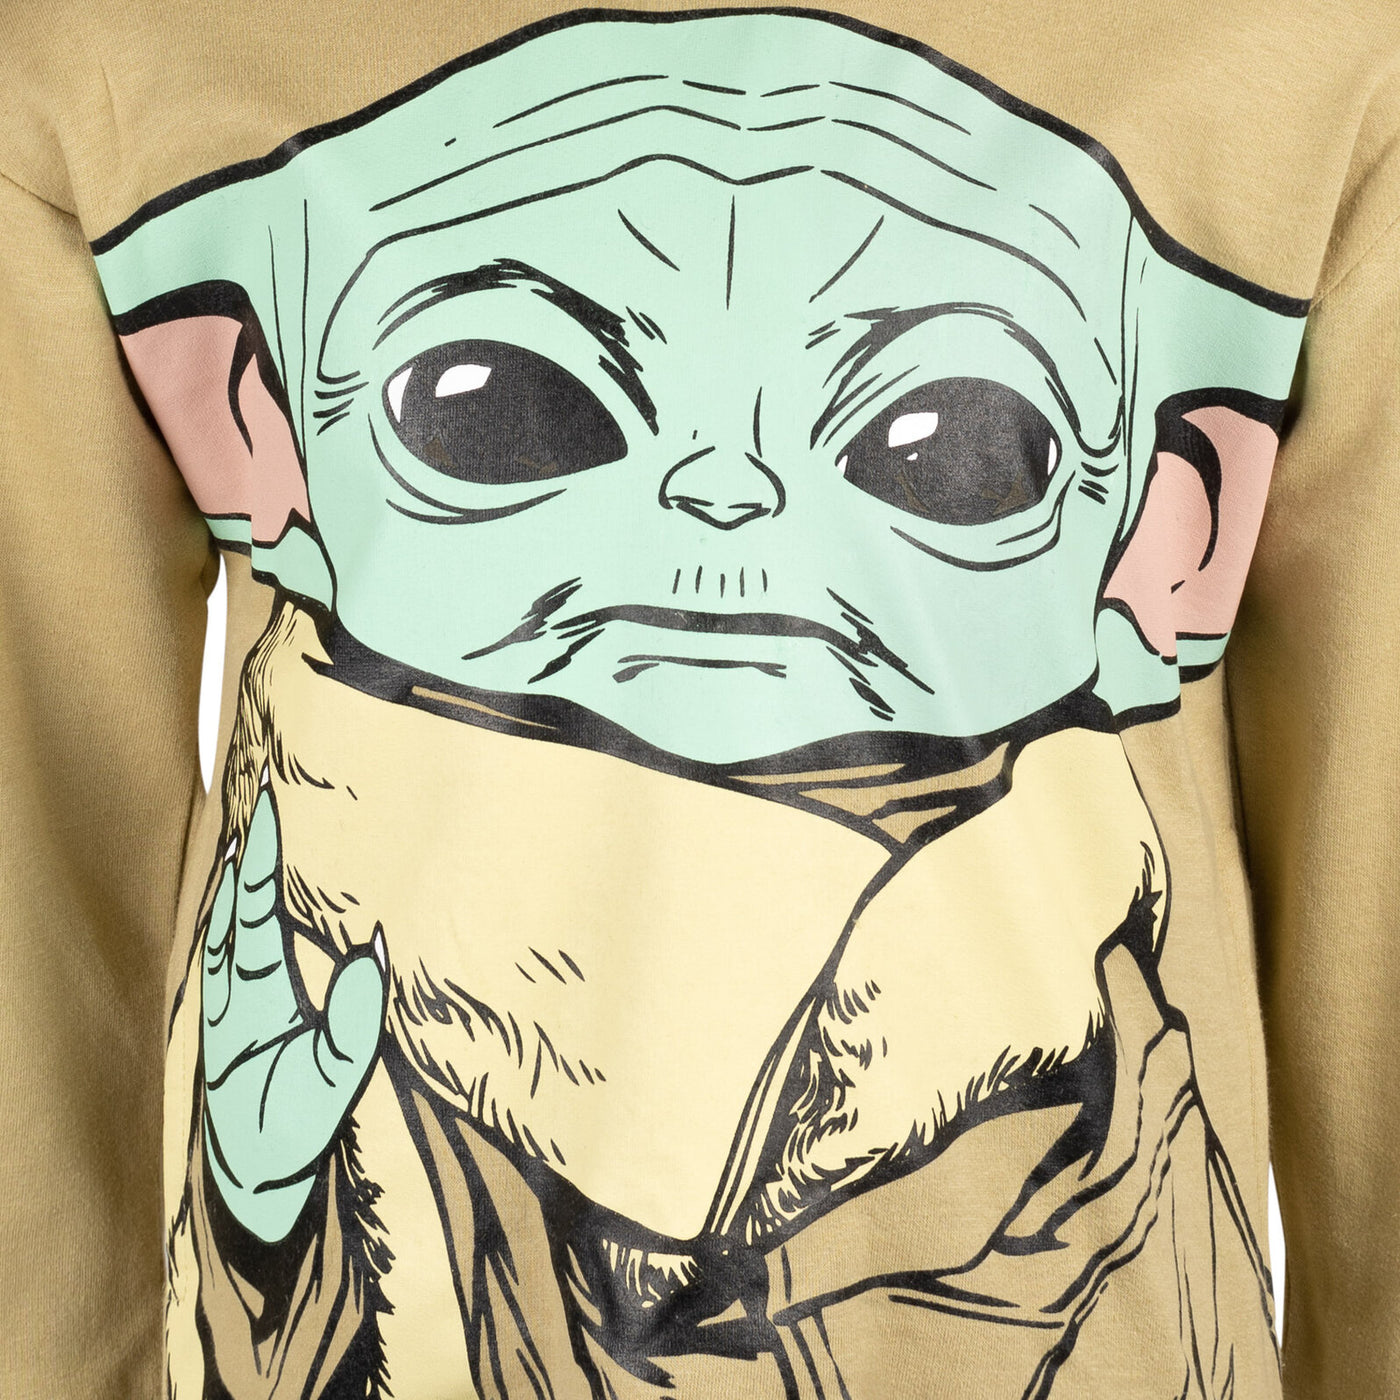 Star Wars The Mandalorian Baby Yoda Fleece Hoodie